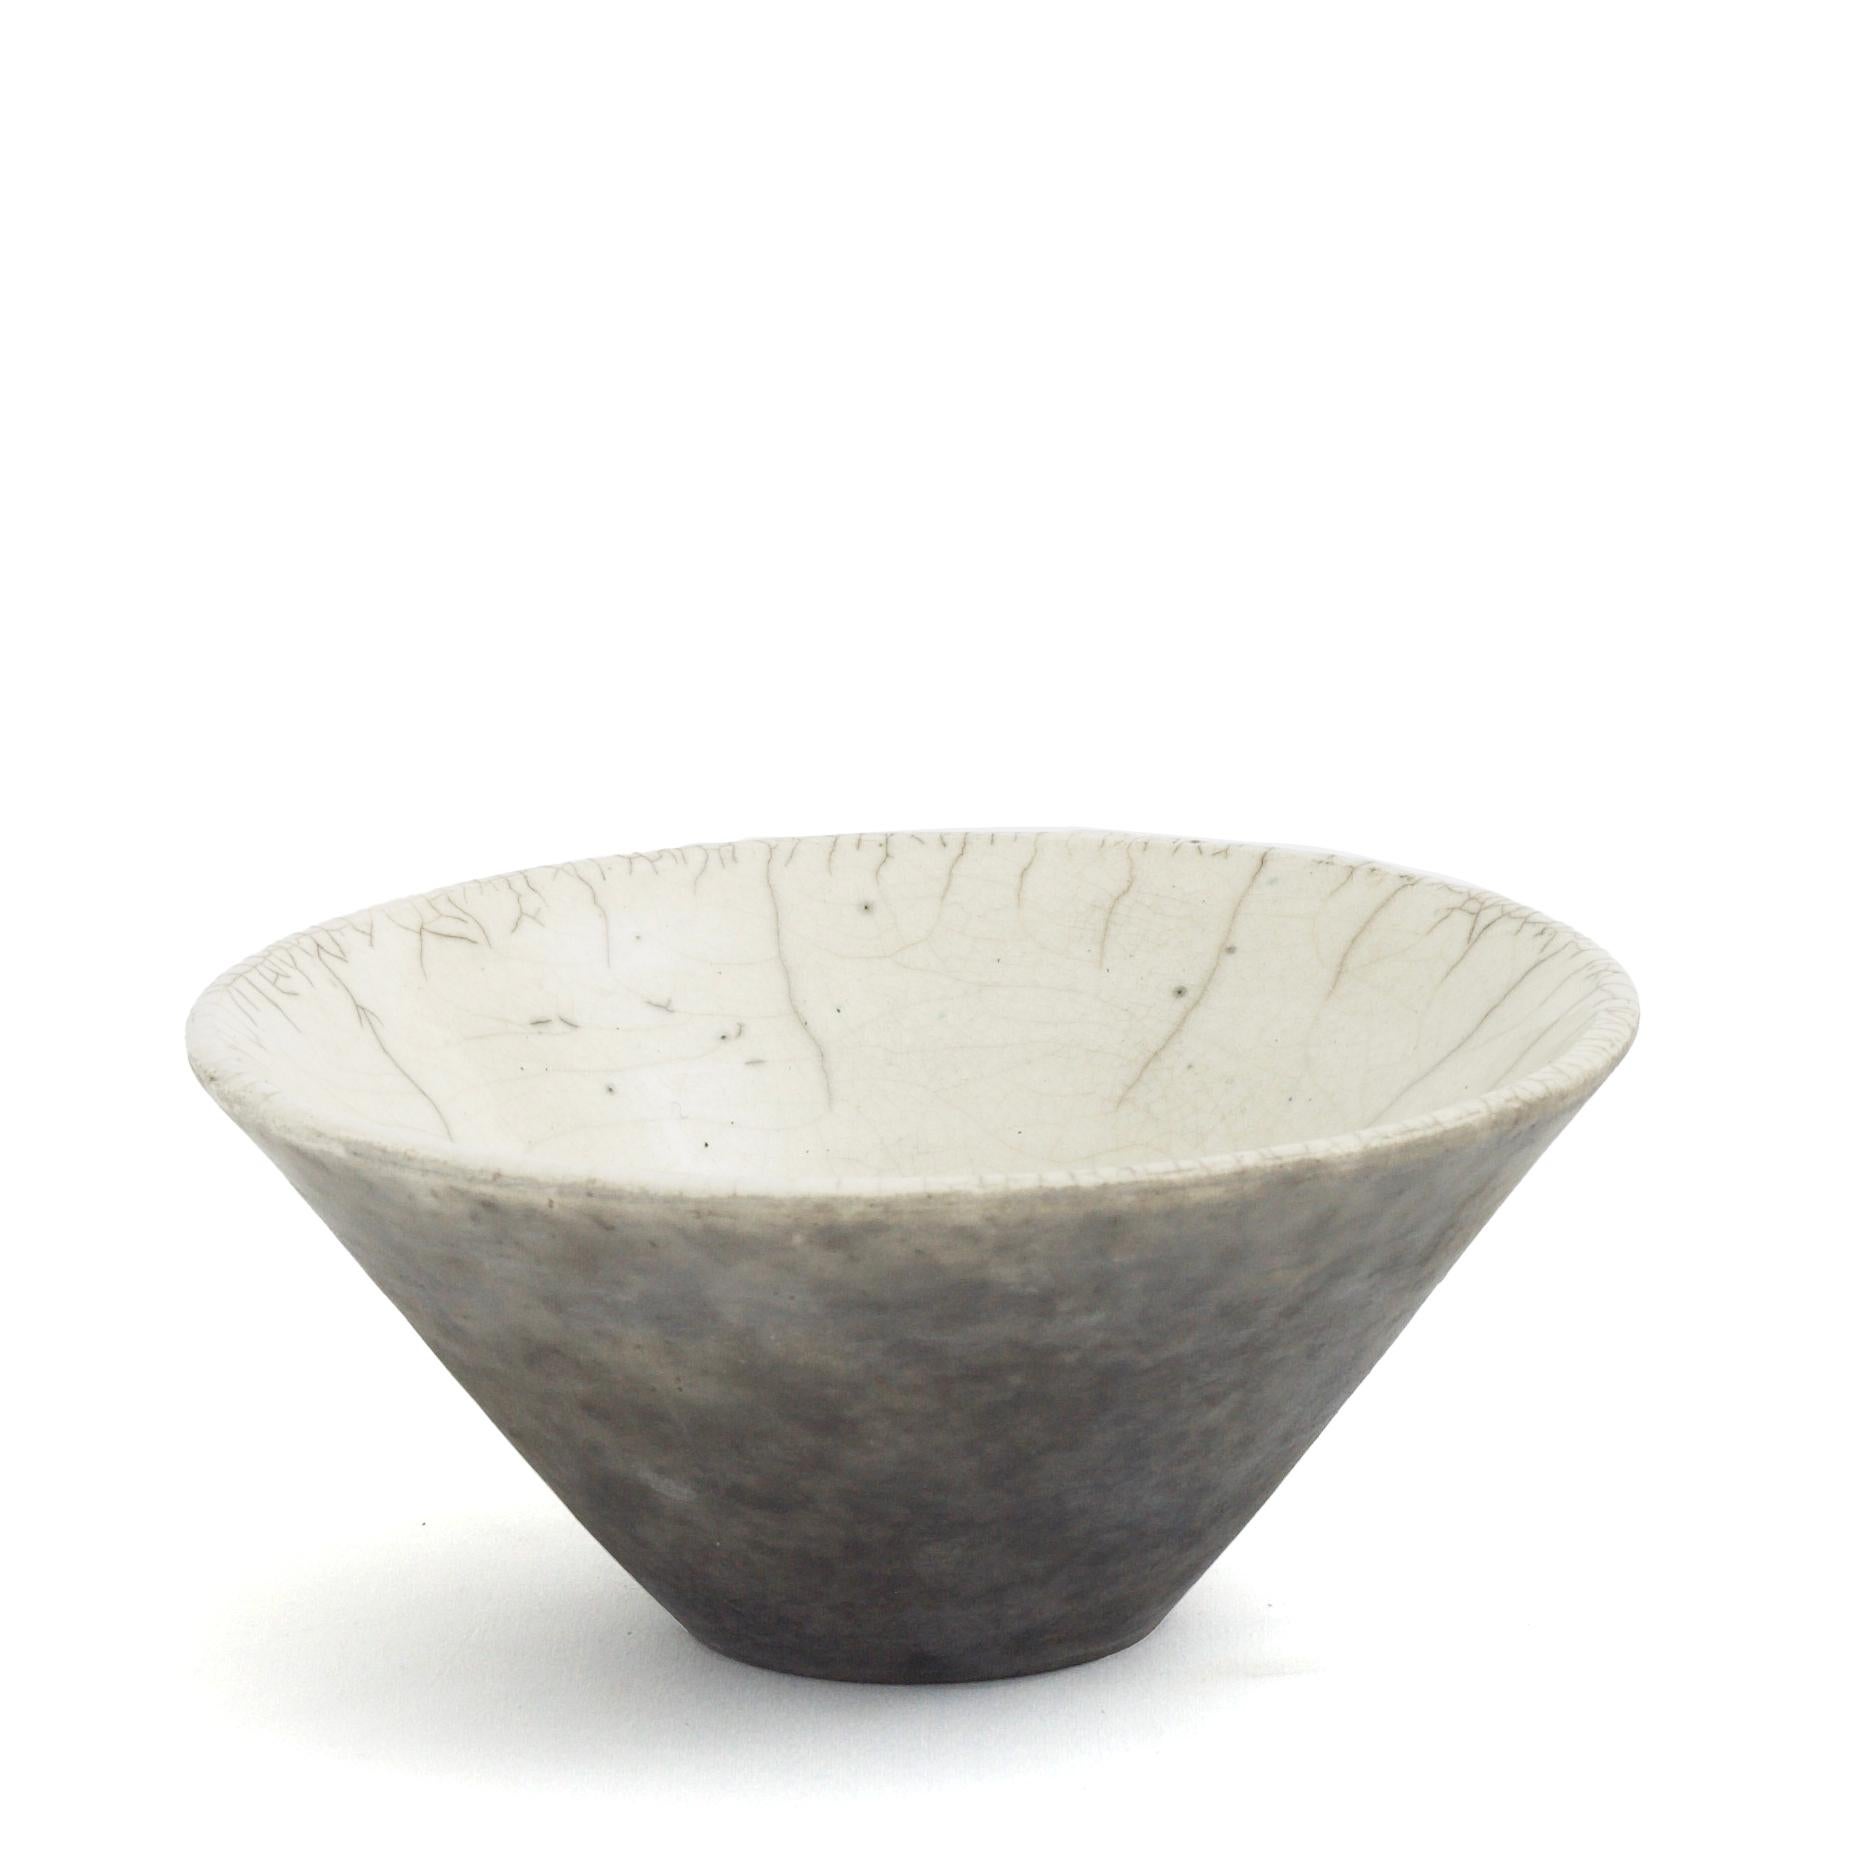 Japanese Modern LAAB Wu Set of 2 Bowls Raku Ceramics Crackle Black White For Sale 3